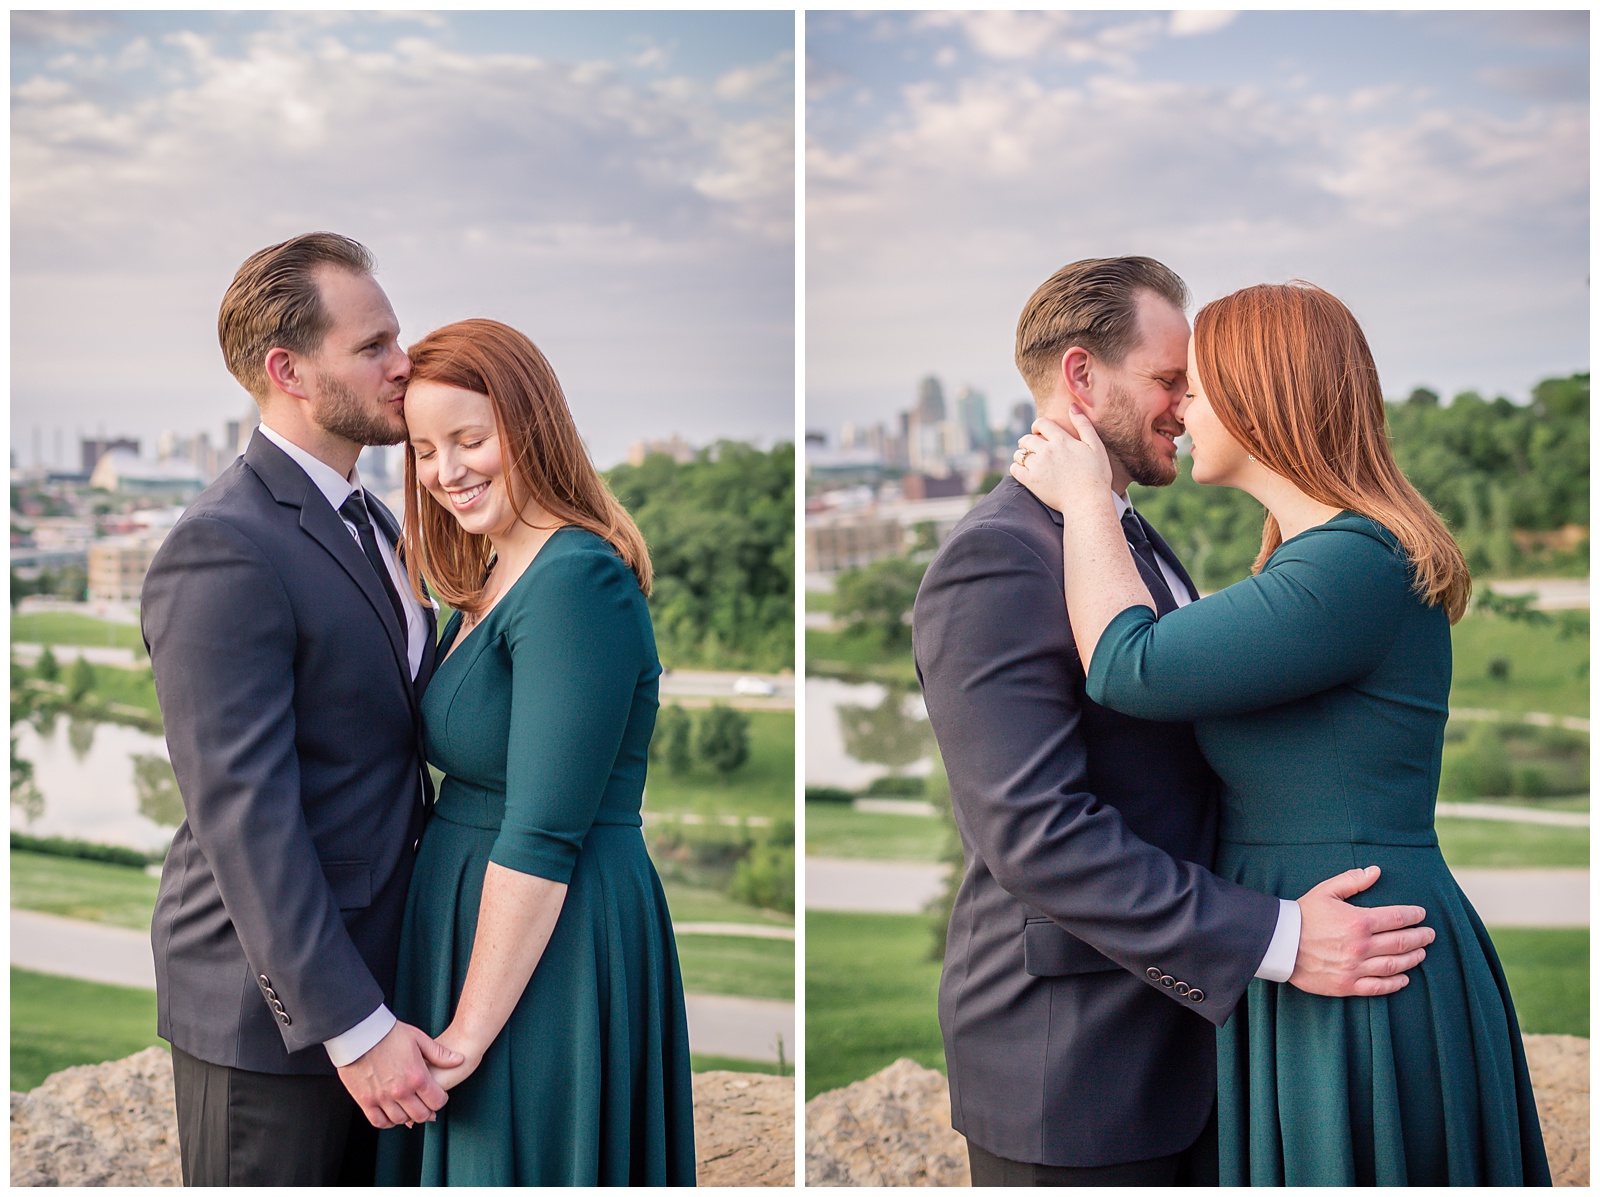 Engagement photography in Penn Valley Park by Kansas City wedding photographers Wisdom-Watson Weddings.